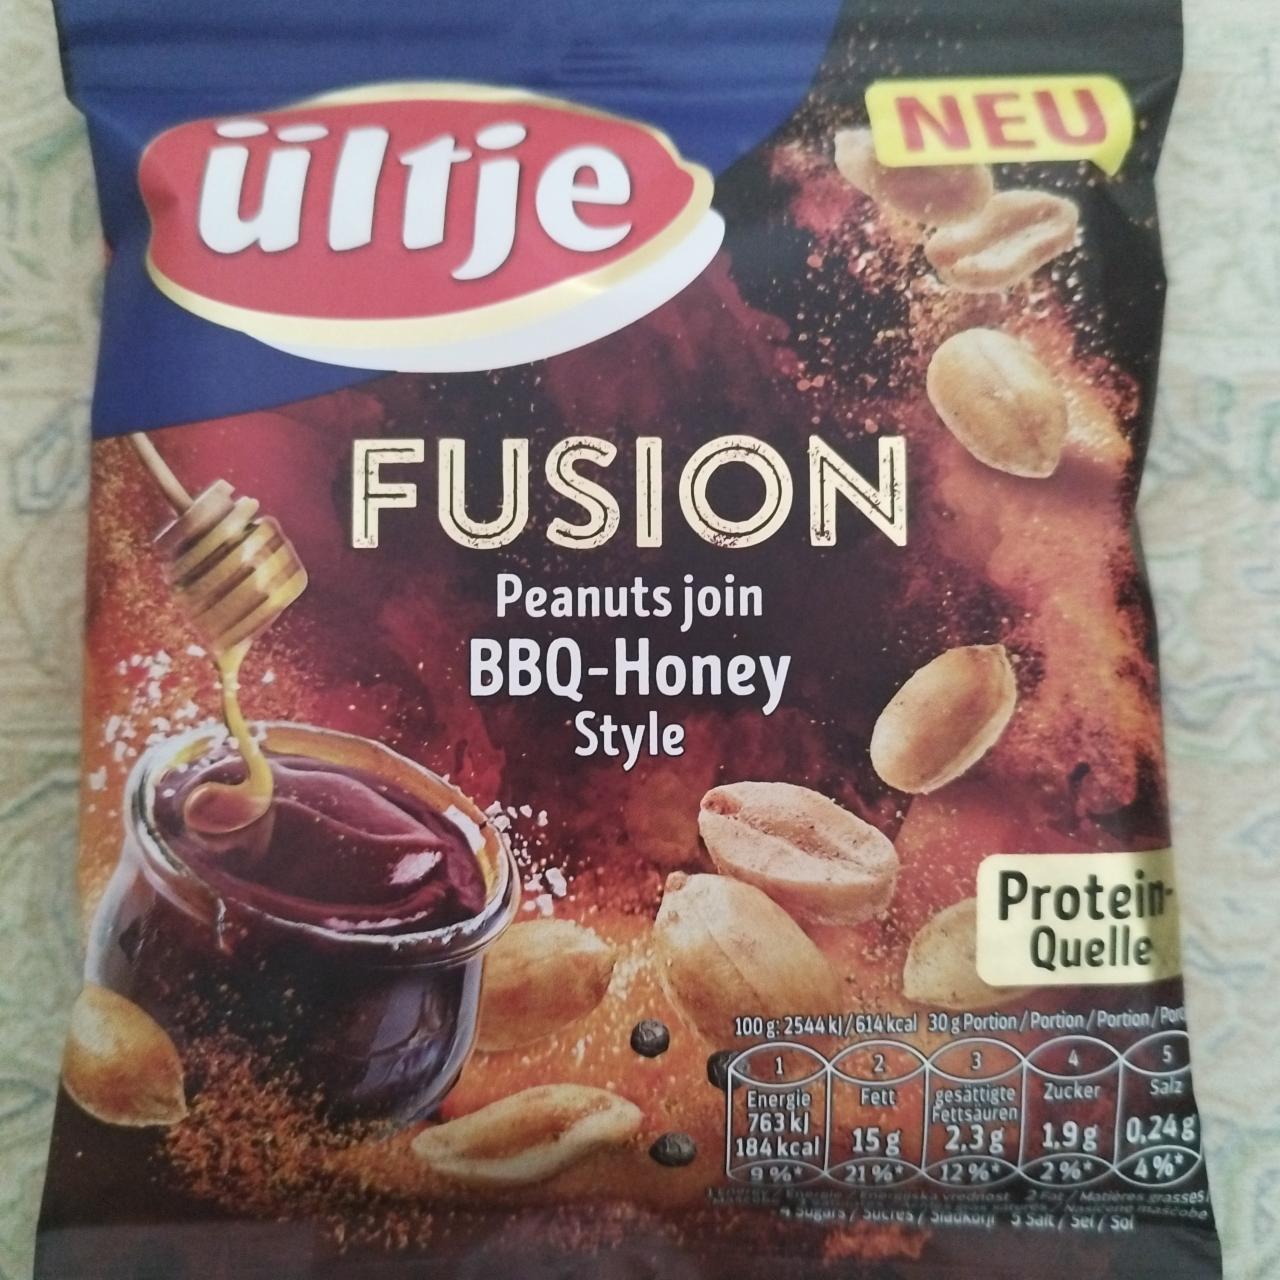 Fotografie - Fusion Peanuts Join BBQ-Honey Style Ültje